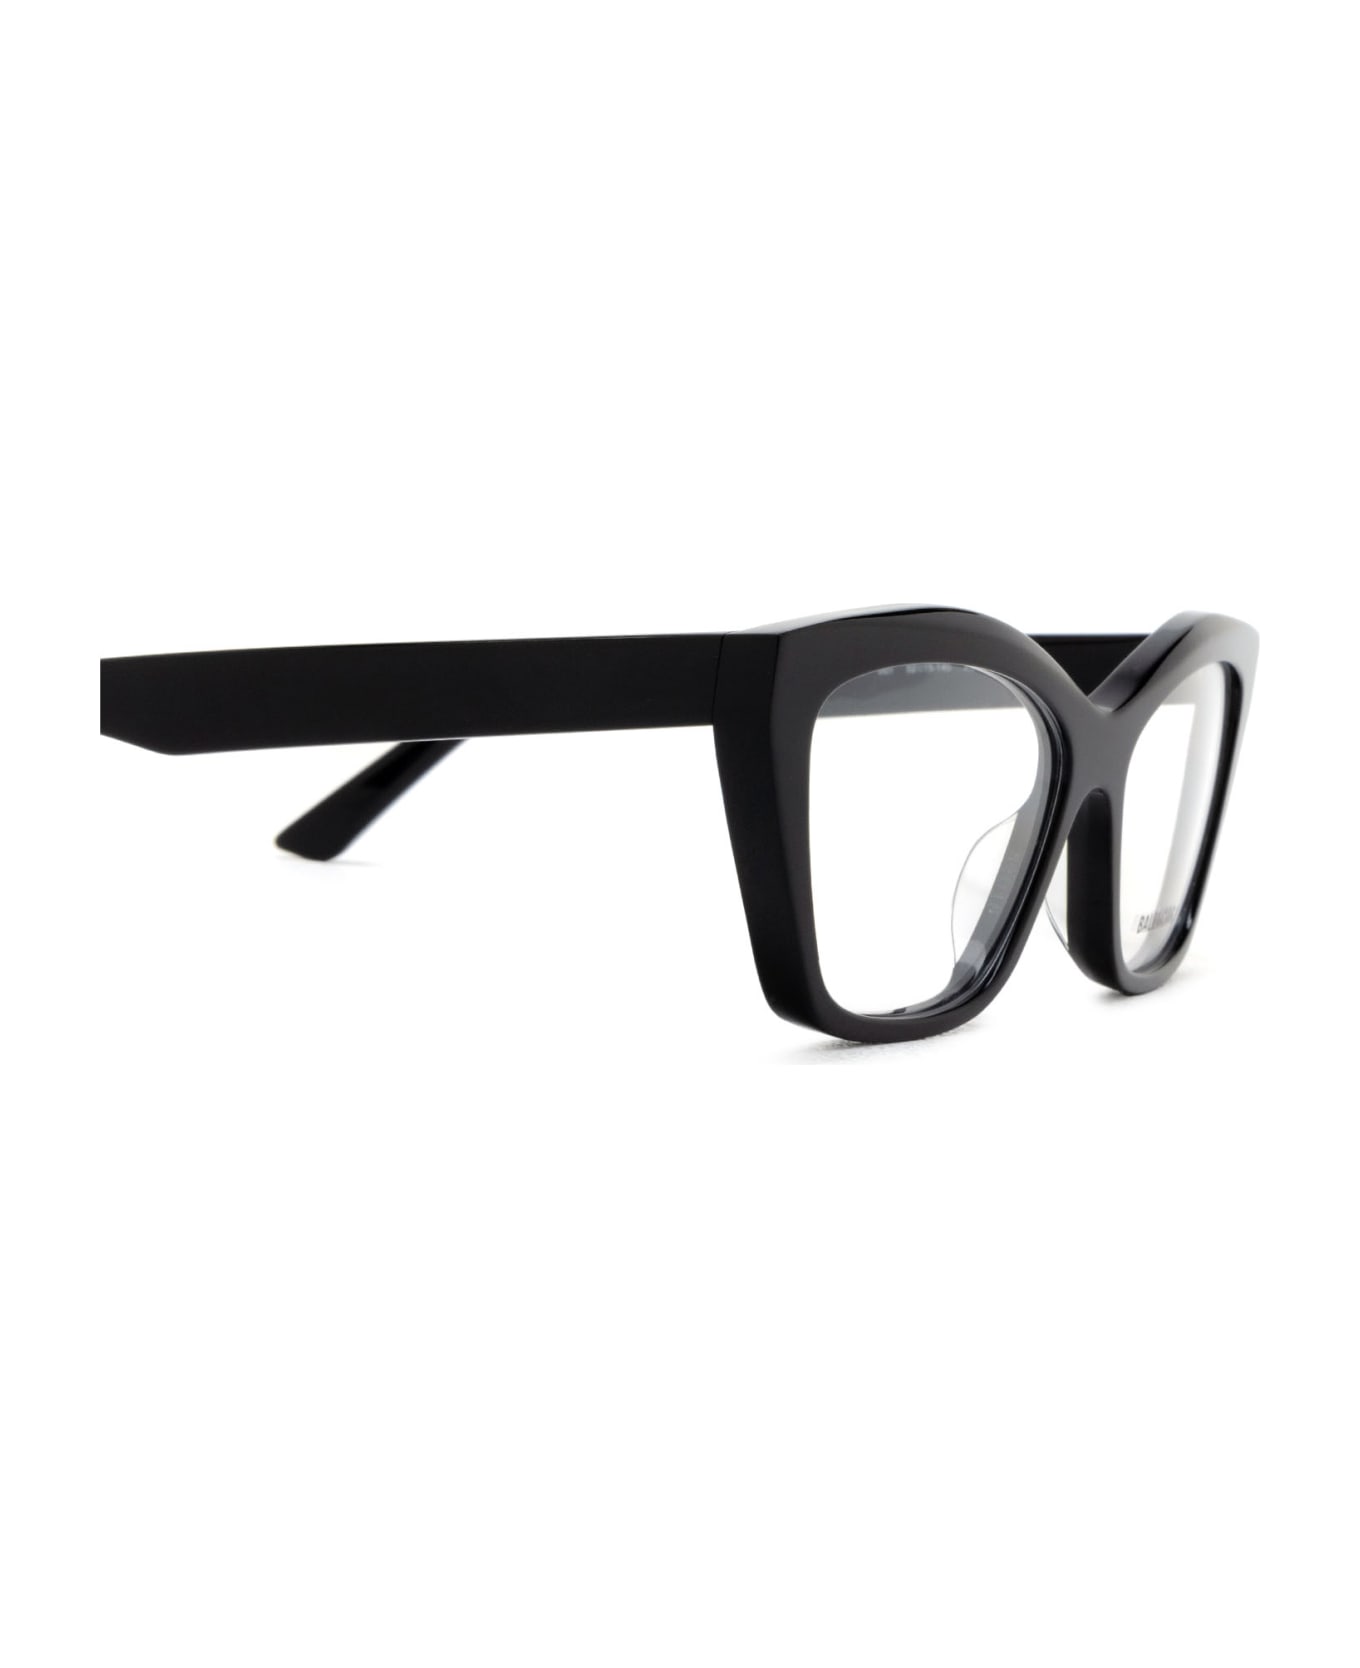 Balenciaga Eyewear Bb0342o Black Glasses - Black